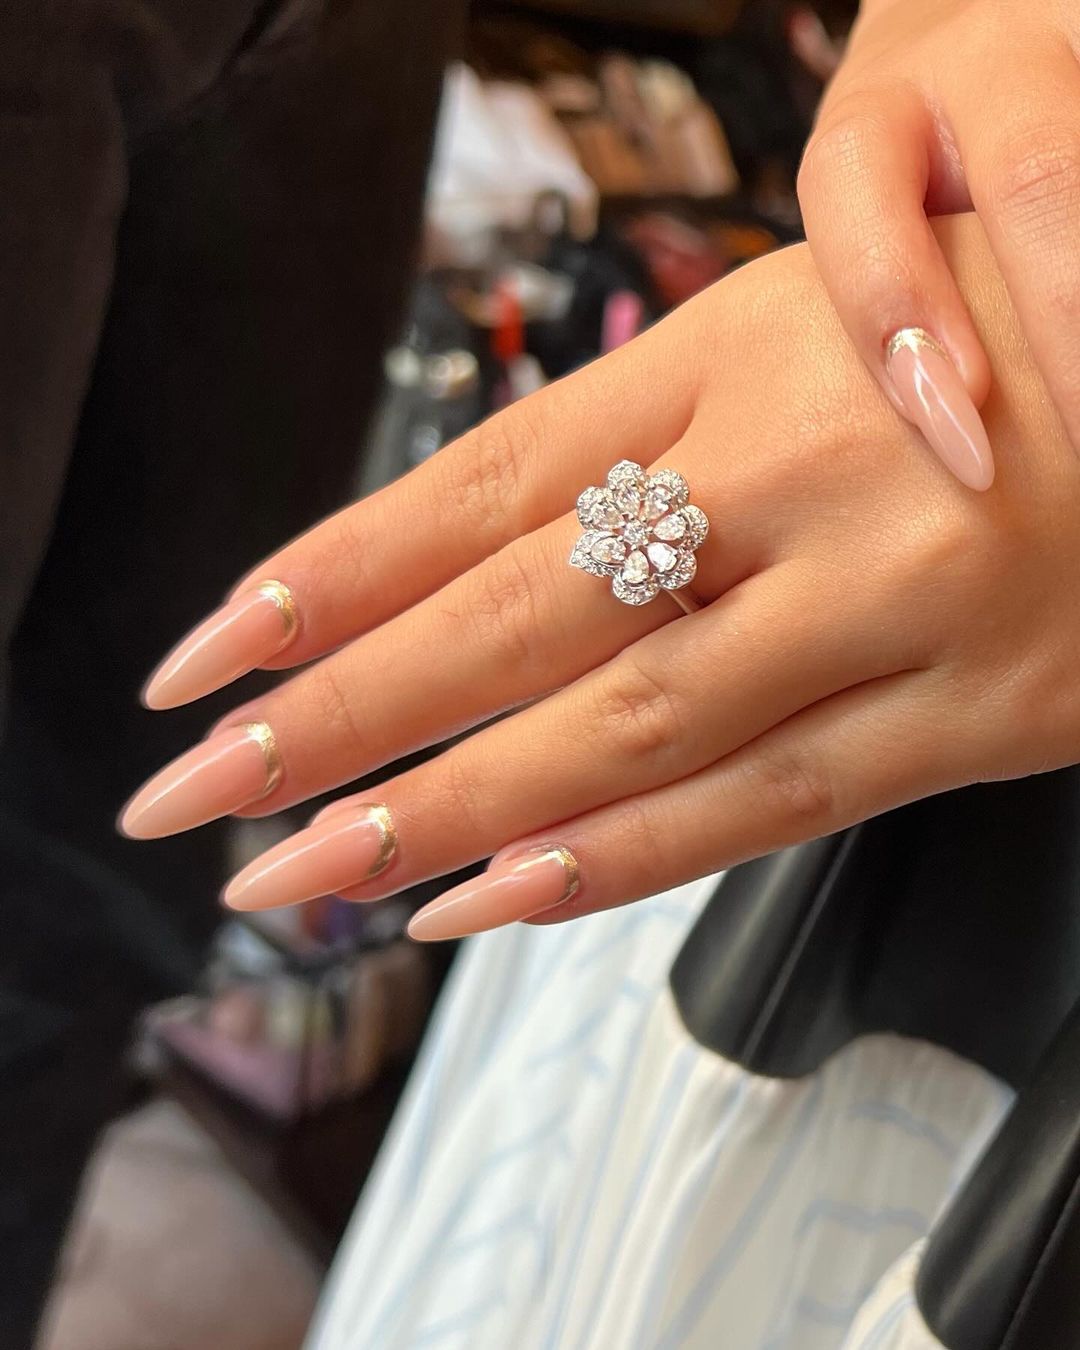 Ariana Greenblatt’s reversible French manicure